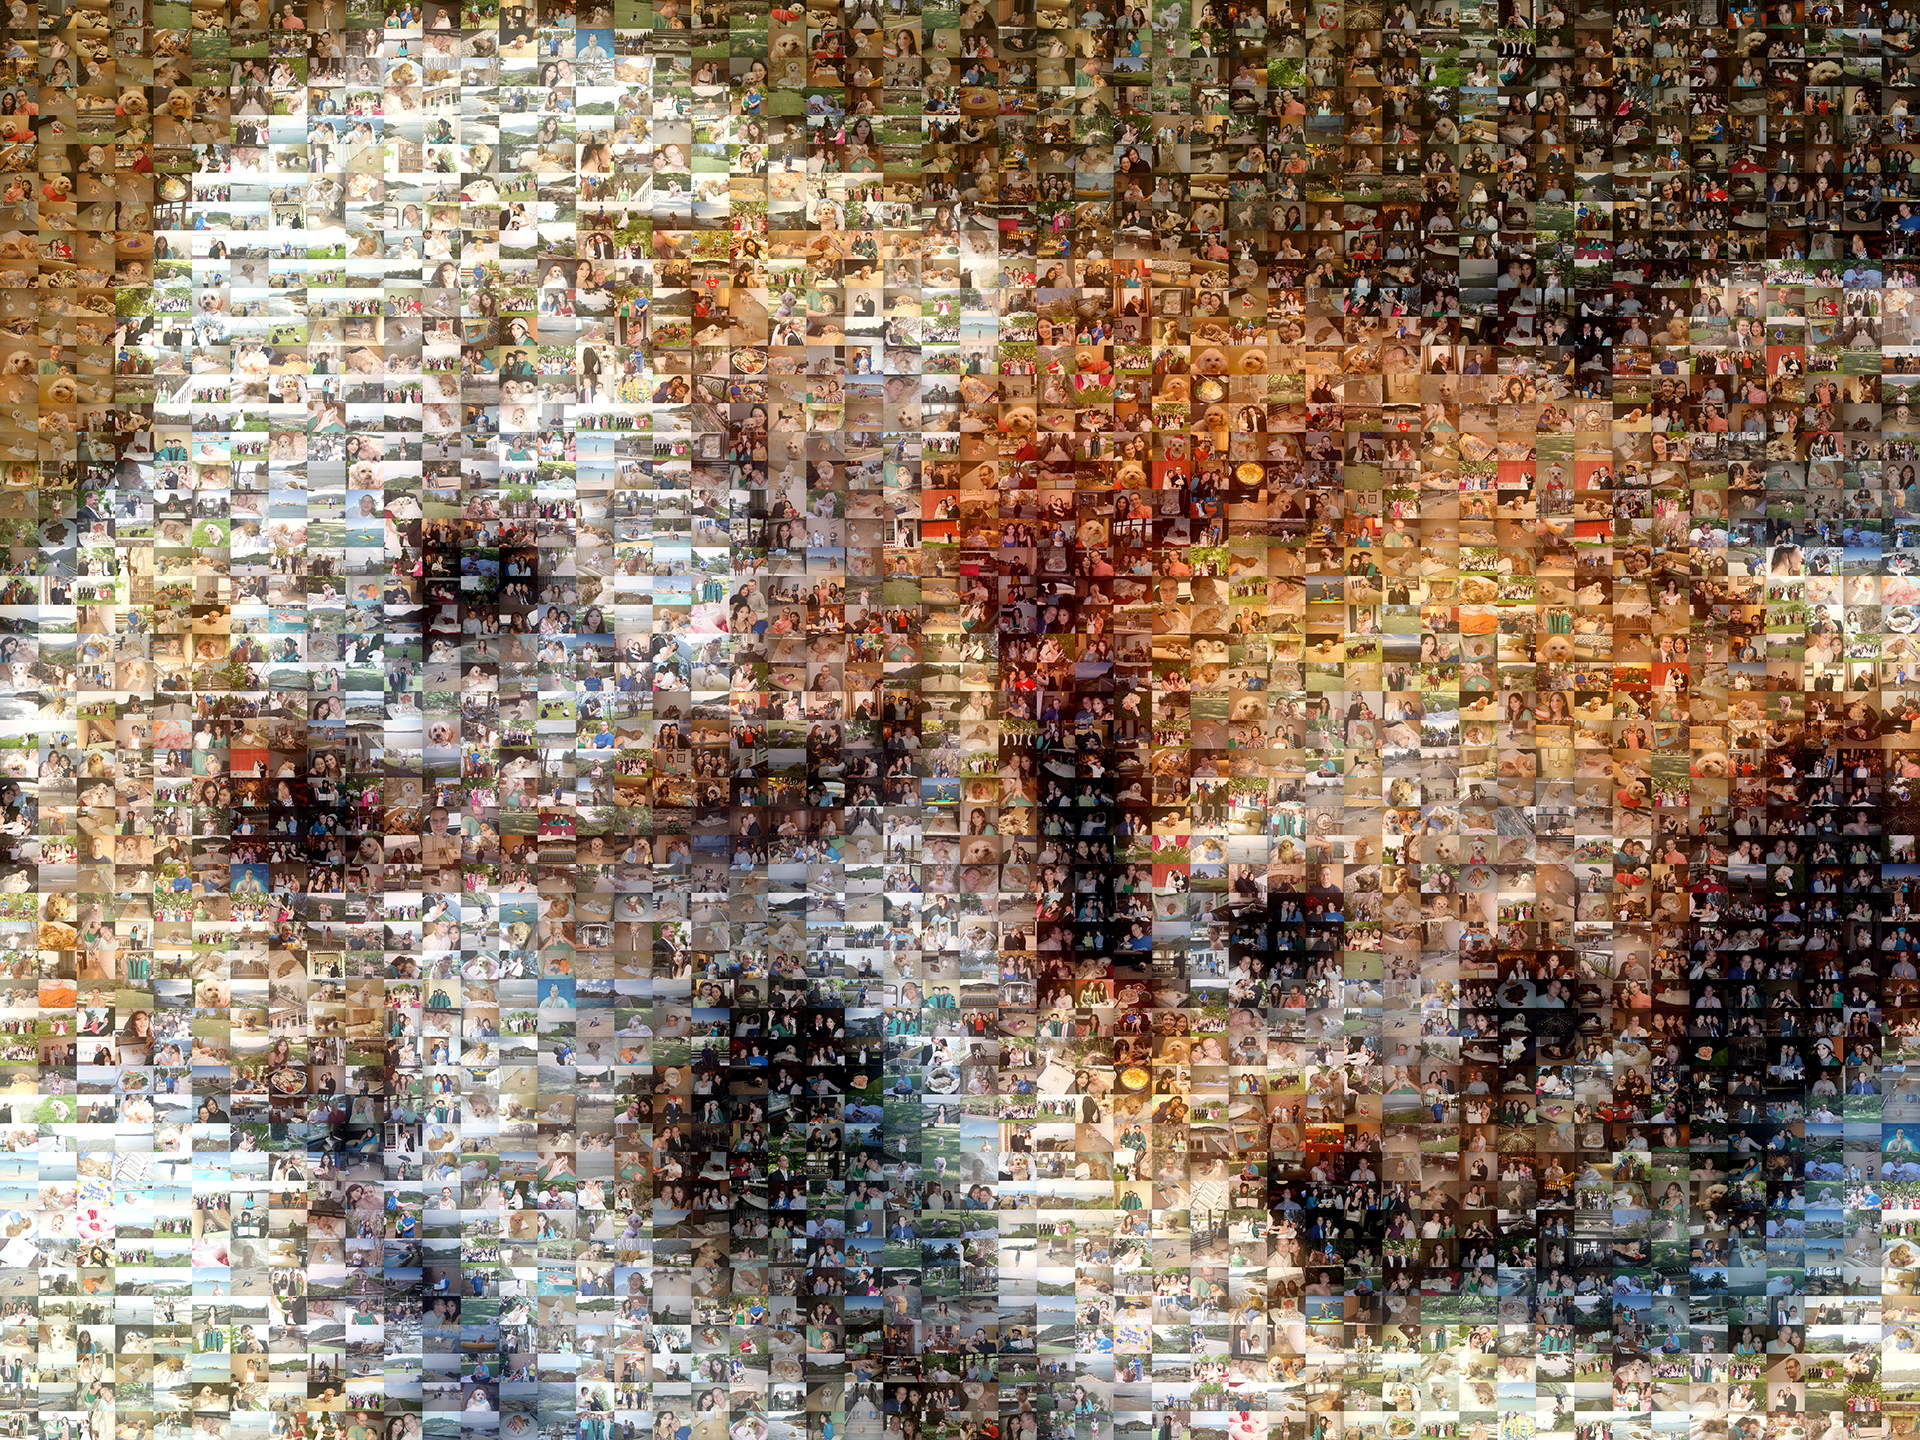 photo mosaic created using almost 1,300 customer selected photos